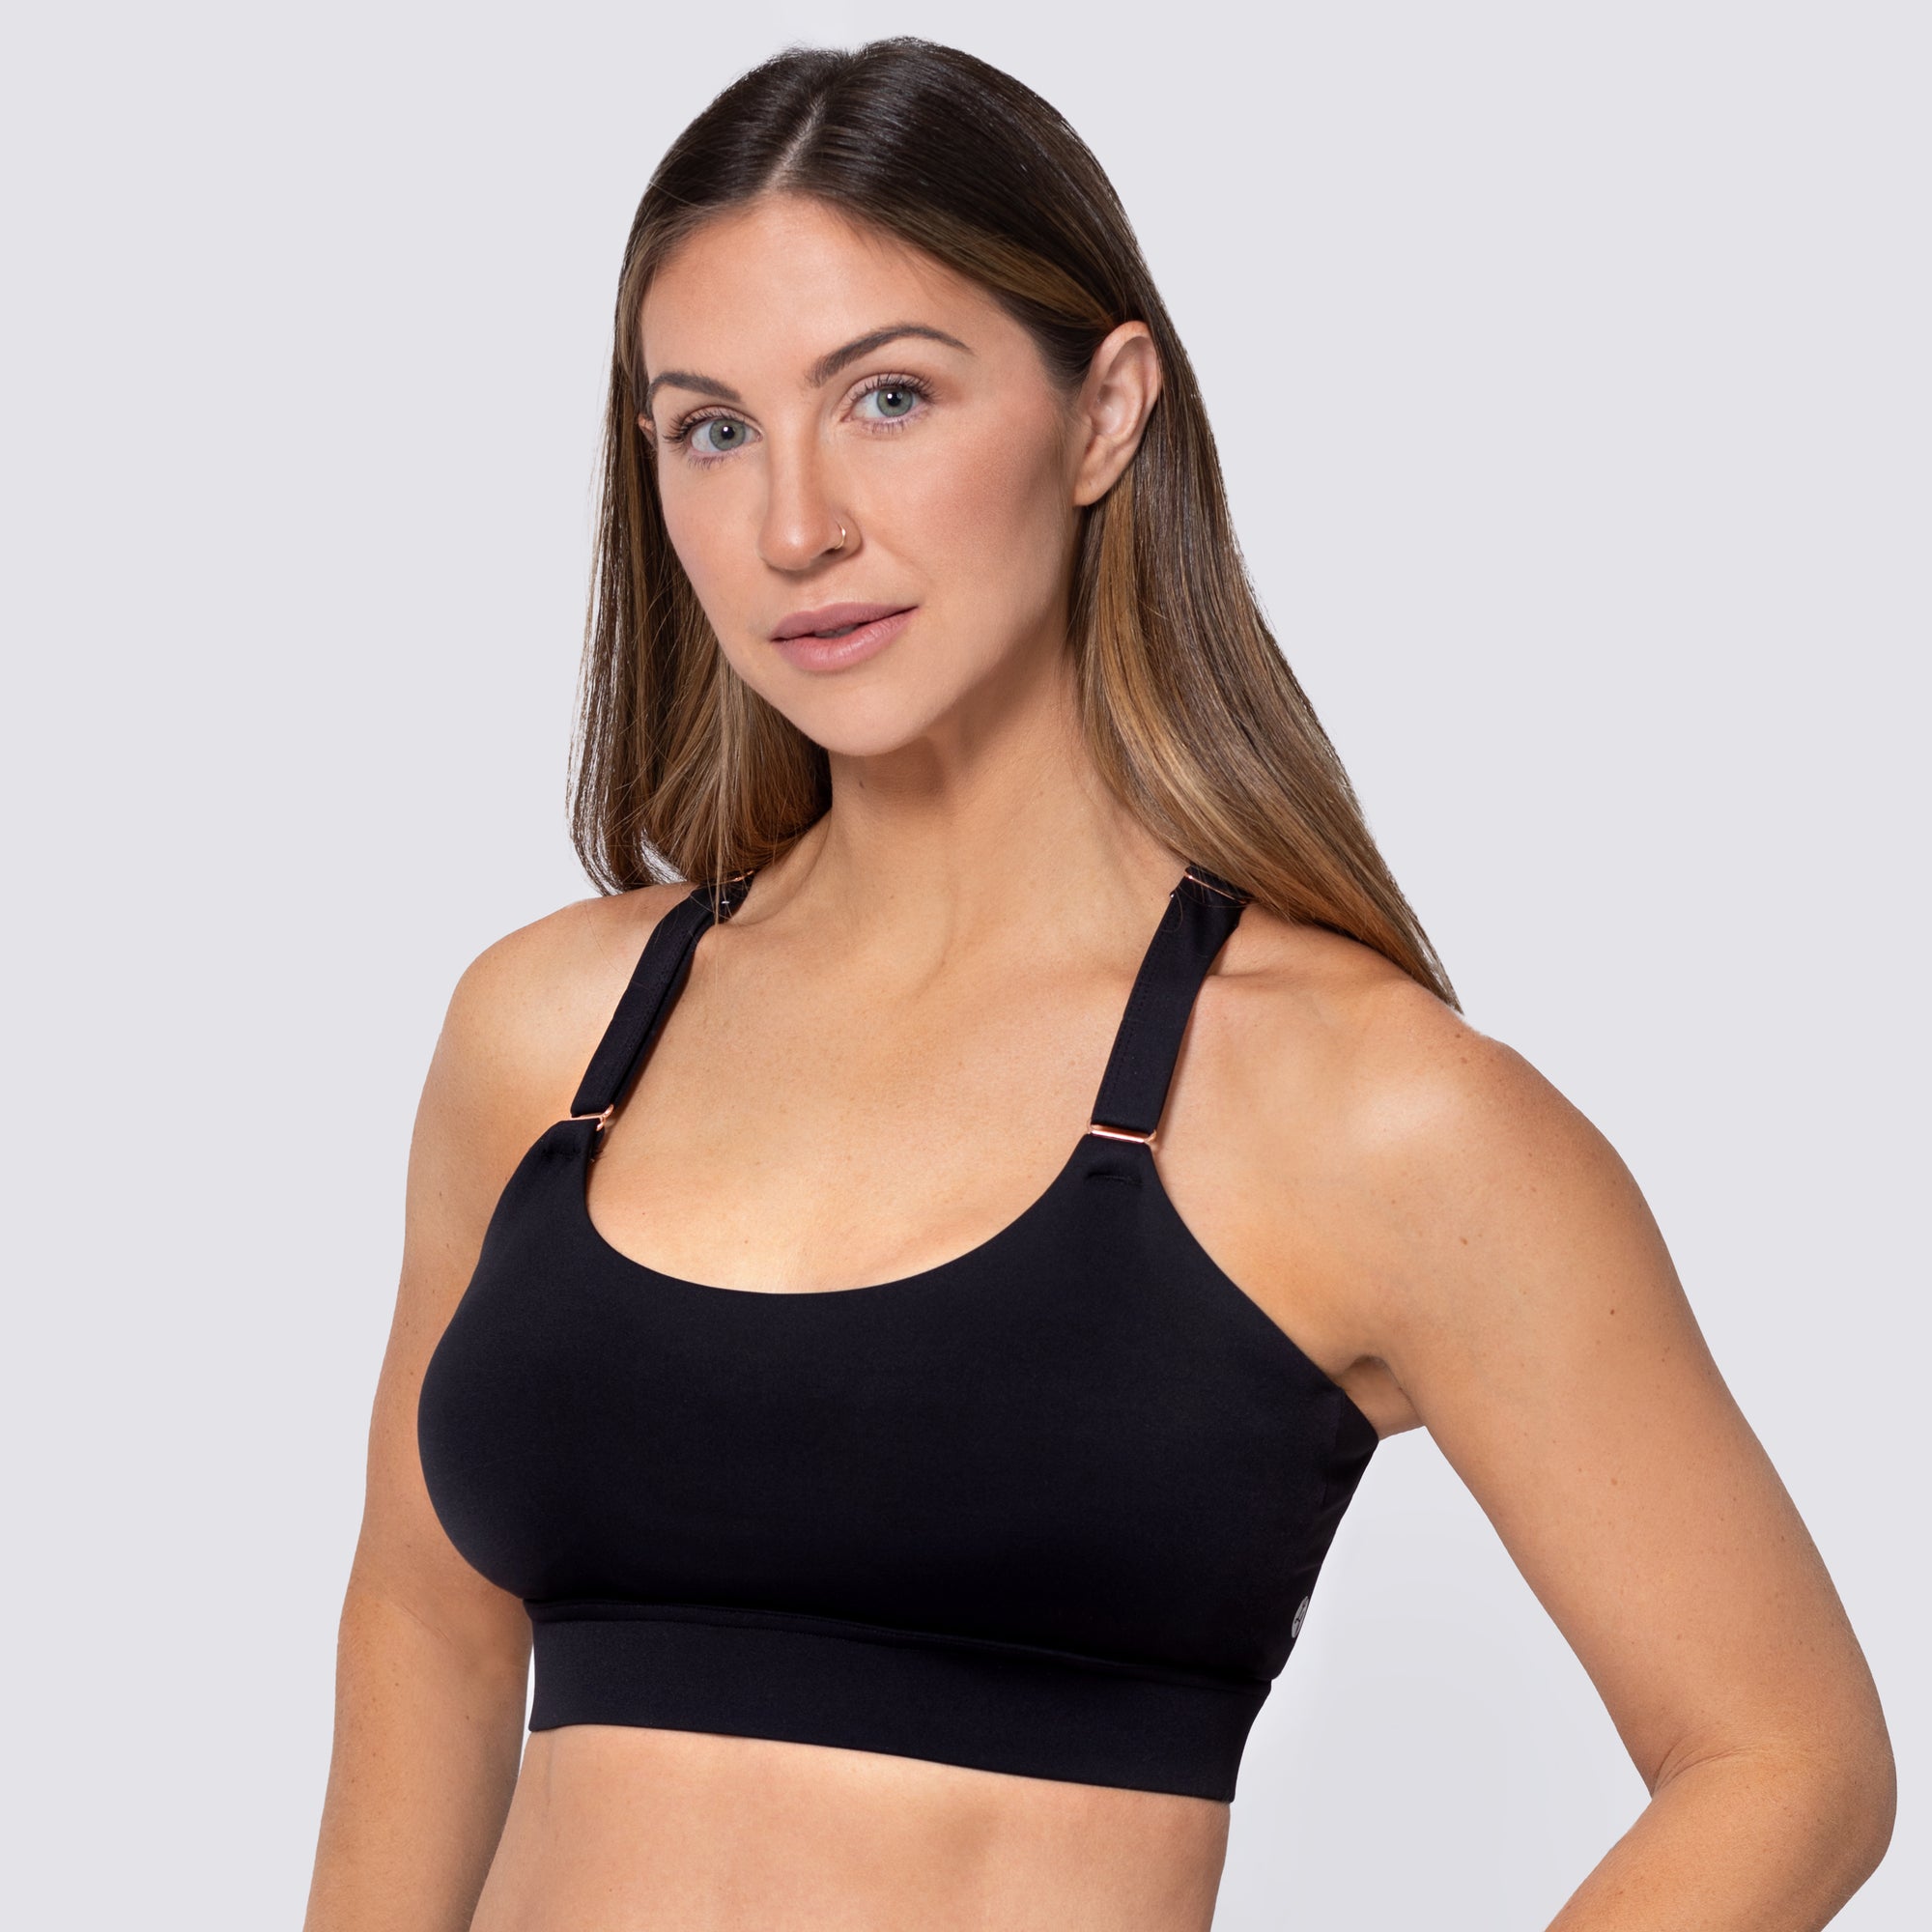 Women's Yoga Bra Tops Activewear Strappy Sports Bra Cross Back Workout Size  S M L XL 2XL 